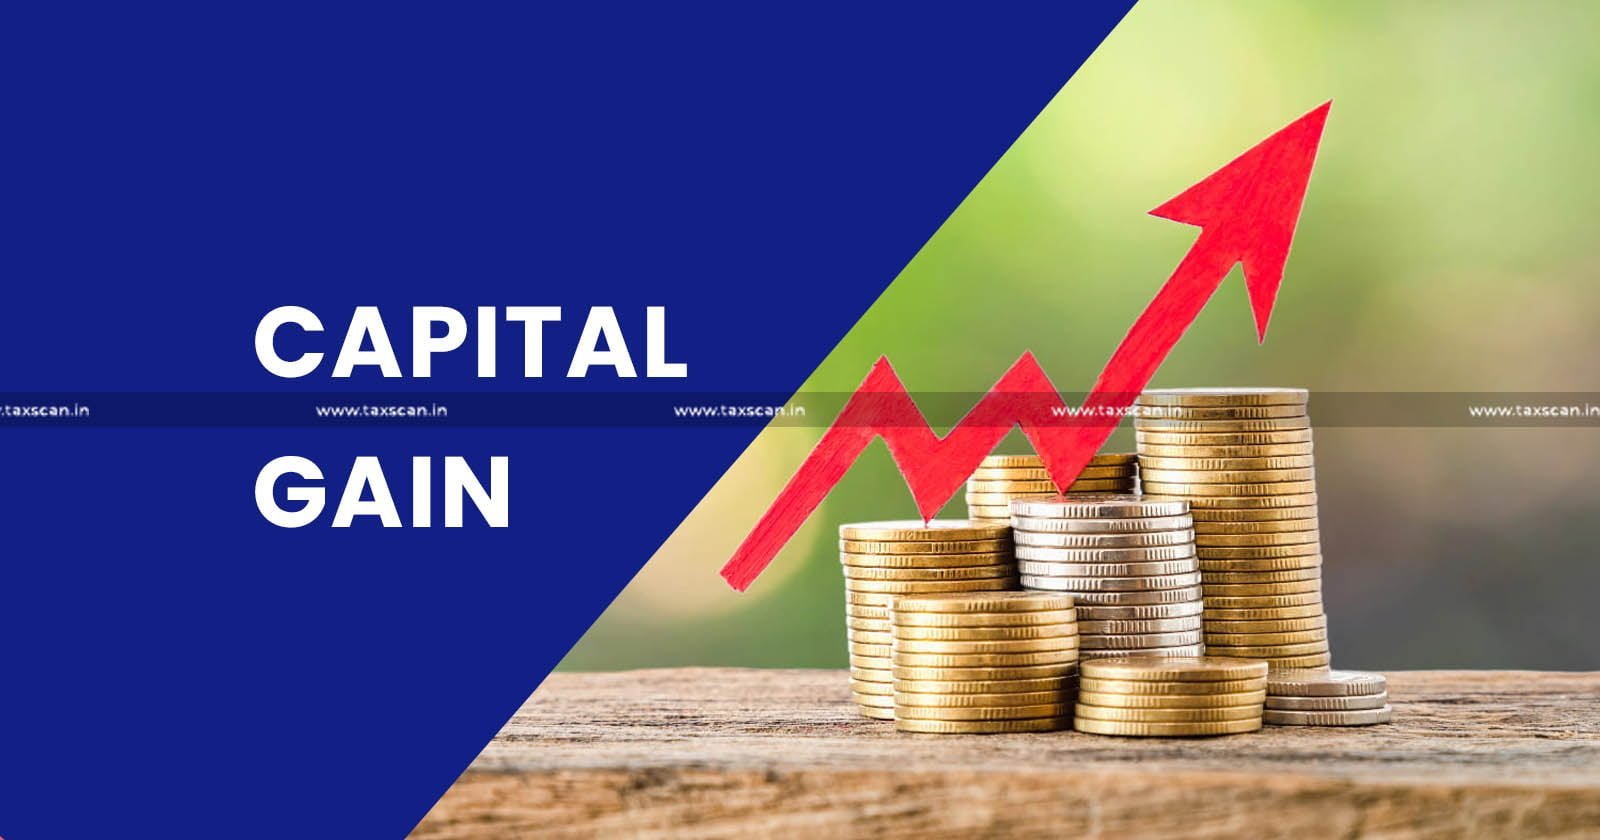 Capital Gain - ITAT - income taxs news - Bangalore bench - taxscan